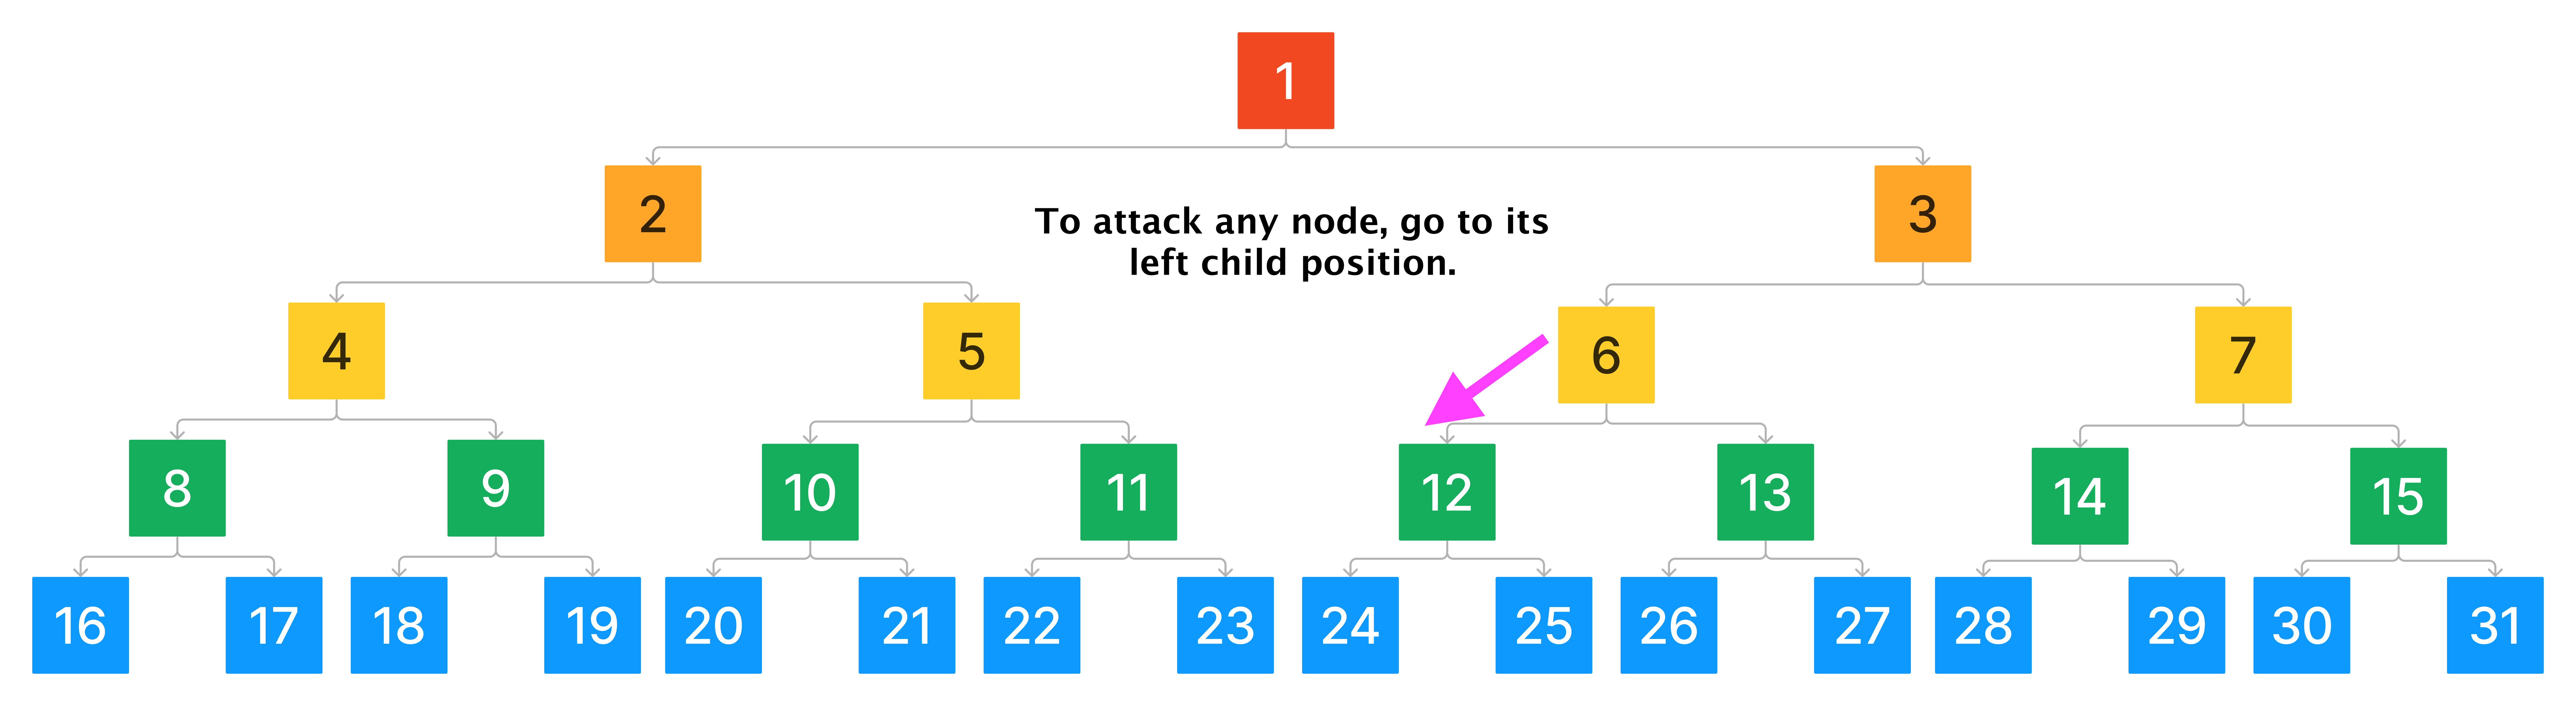 Attacking node 6